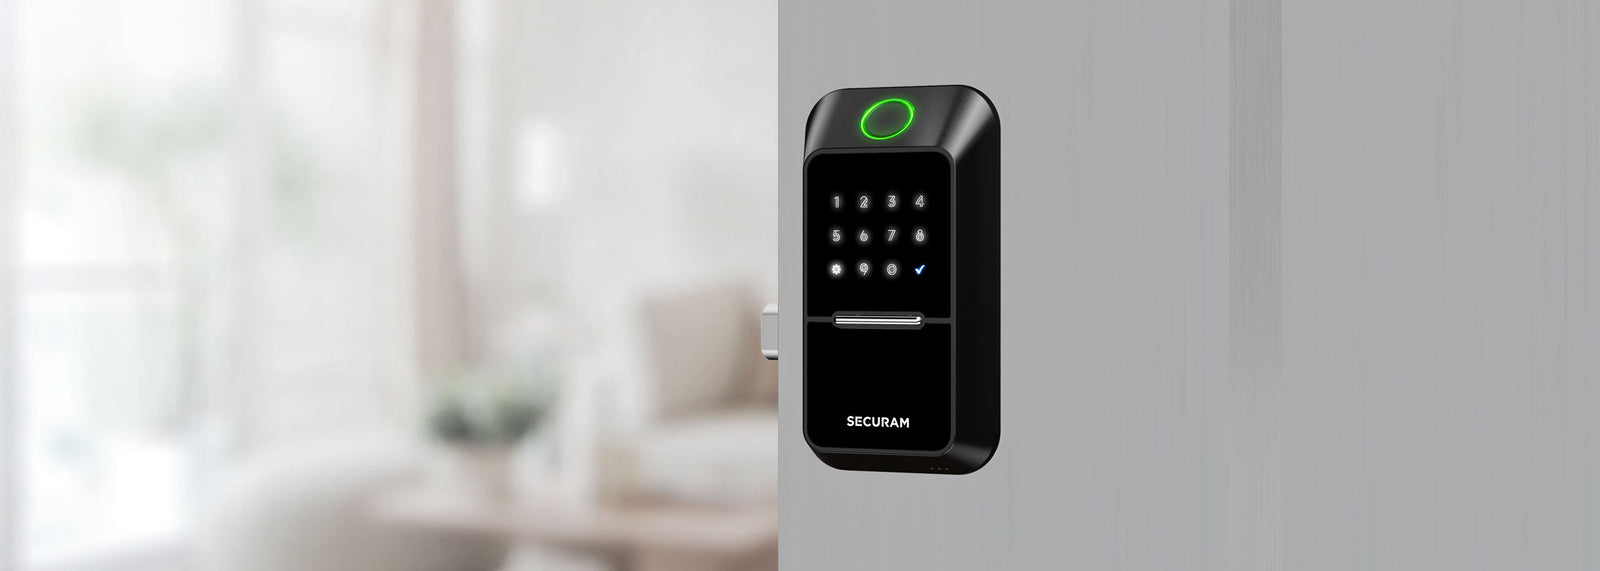 Securam EOS Wi-Fi Fingerprint Smart Door Lock - Black